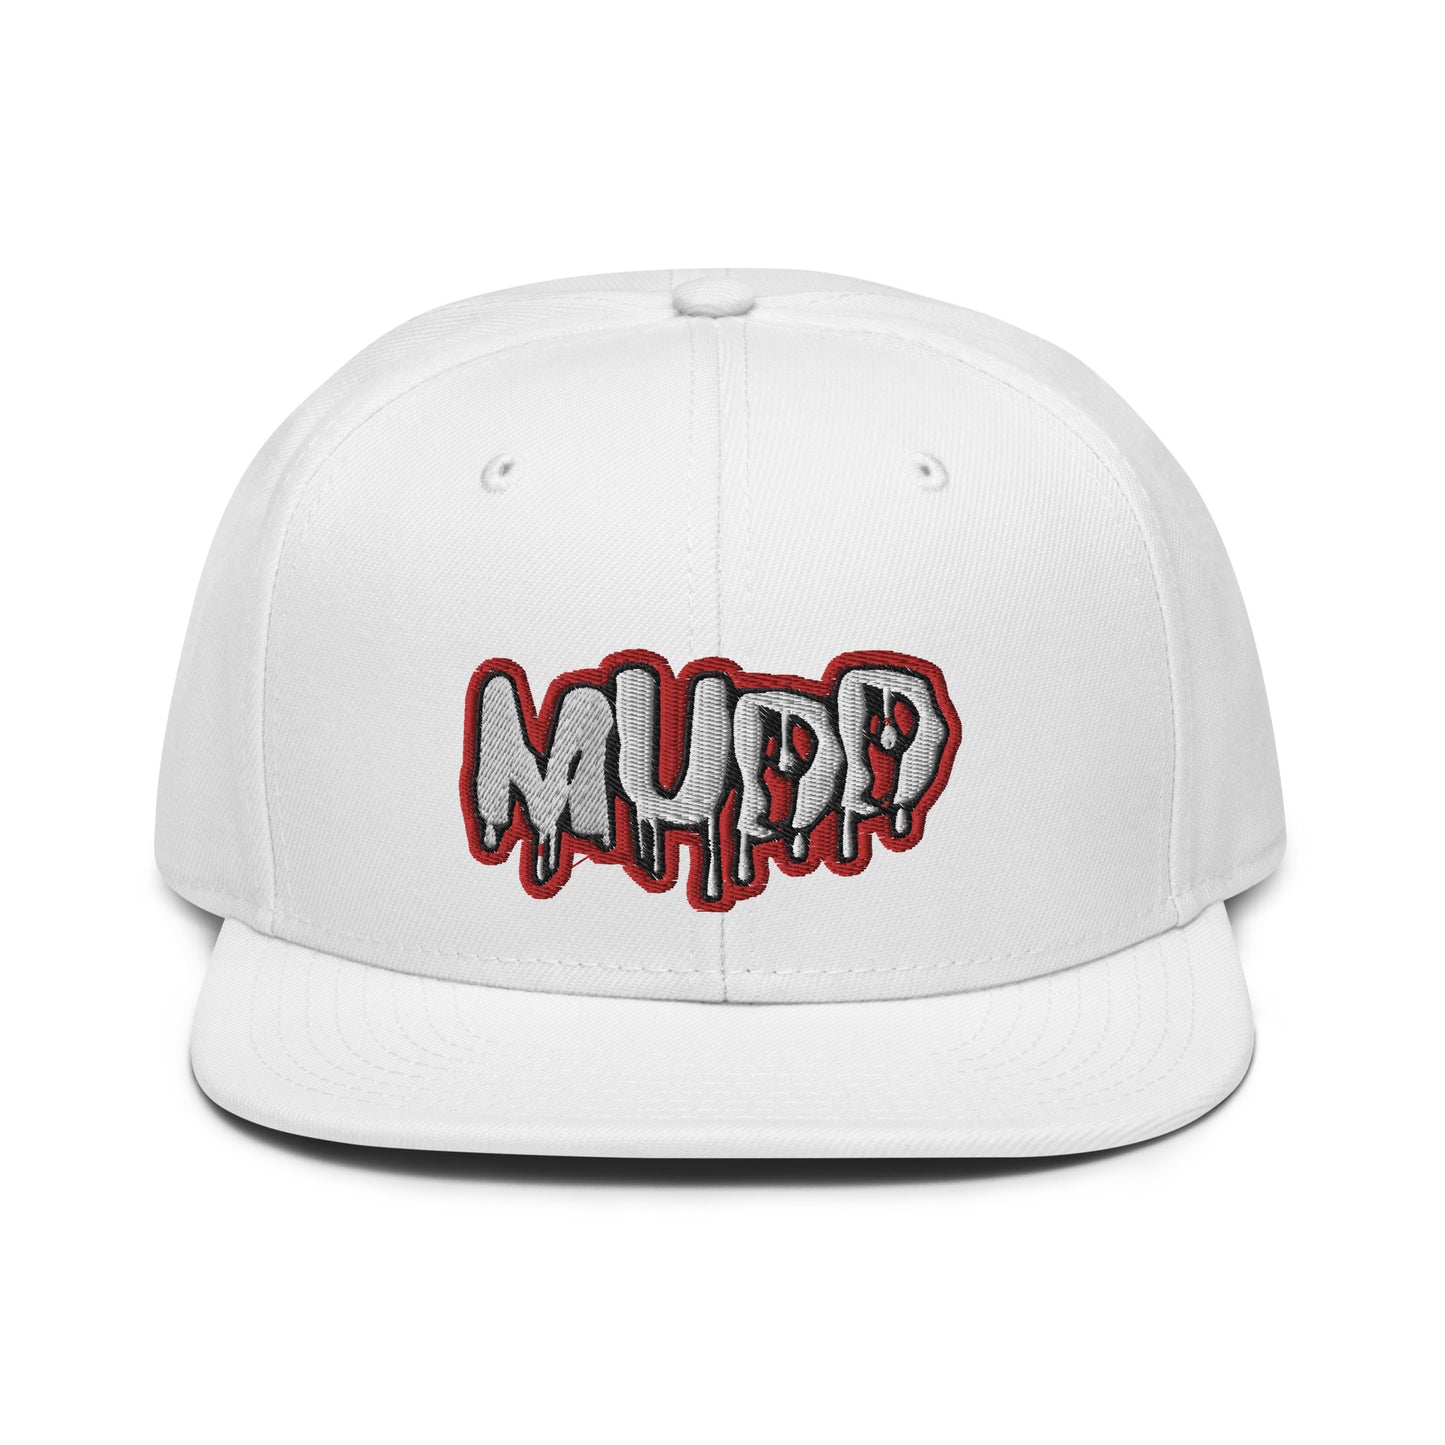 MUDD Fitness Snapback Hat